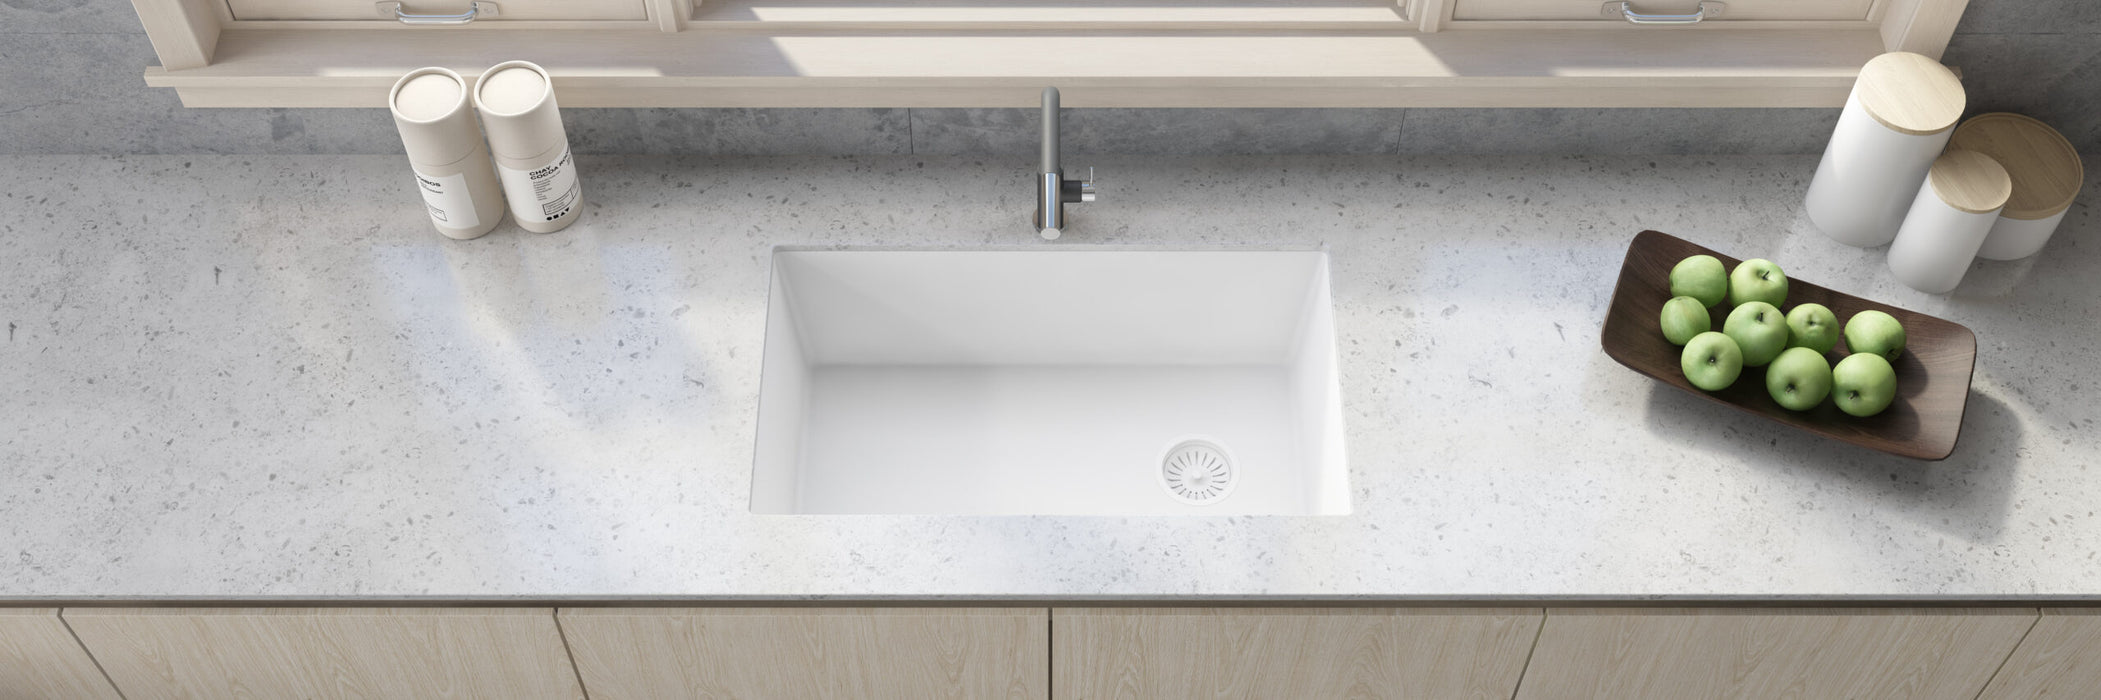 Ruvati 32 x 19 inch epiGranite Undermount Granite Composite Single Bowl Kitchen Sink – Arctic White – RVG2033WH